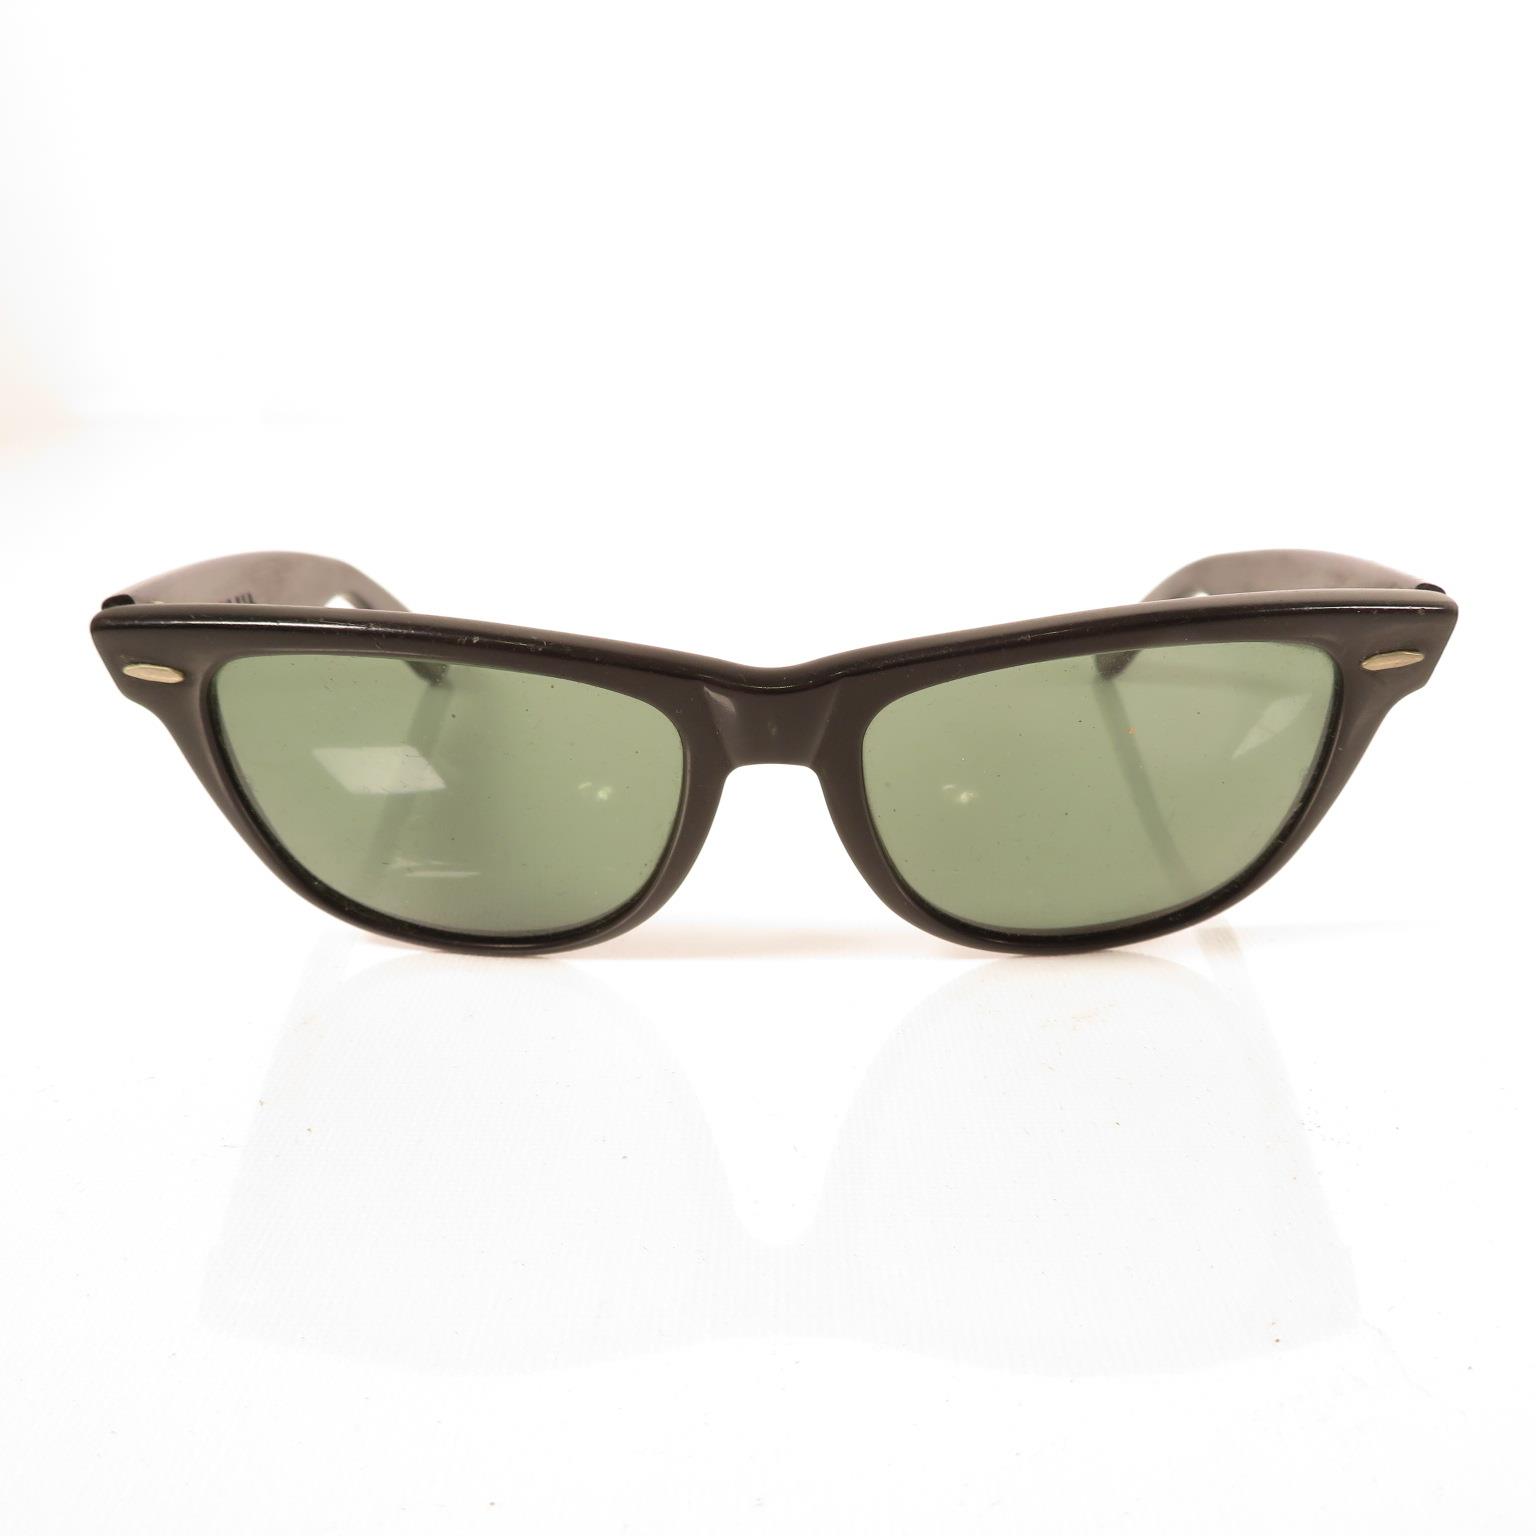 6x pairs Ray Ban sunglasses - - Image 13 of 31